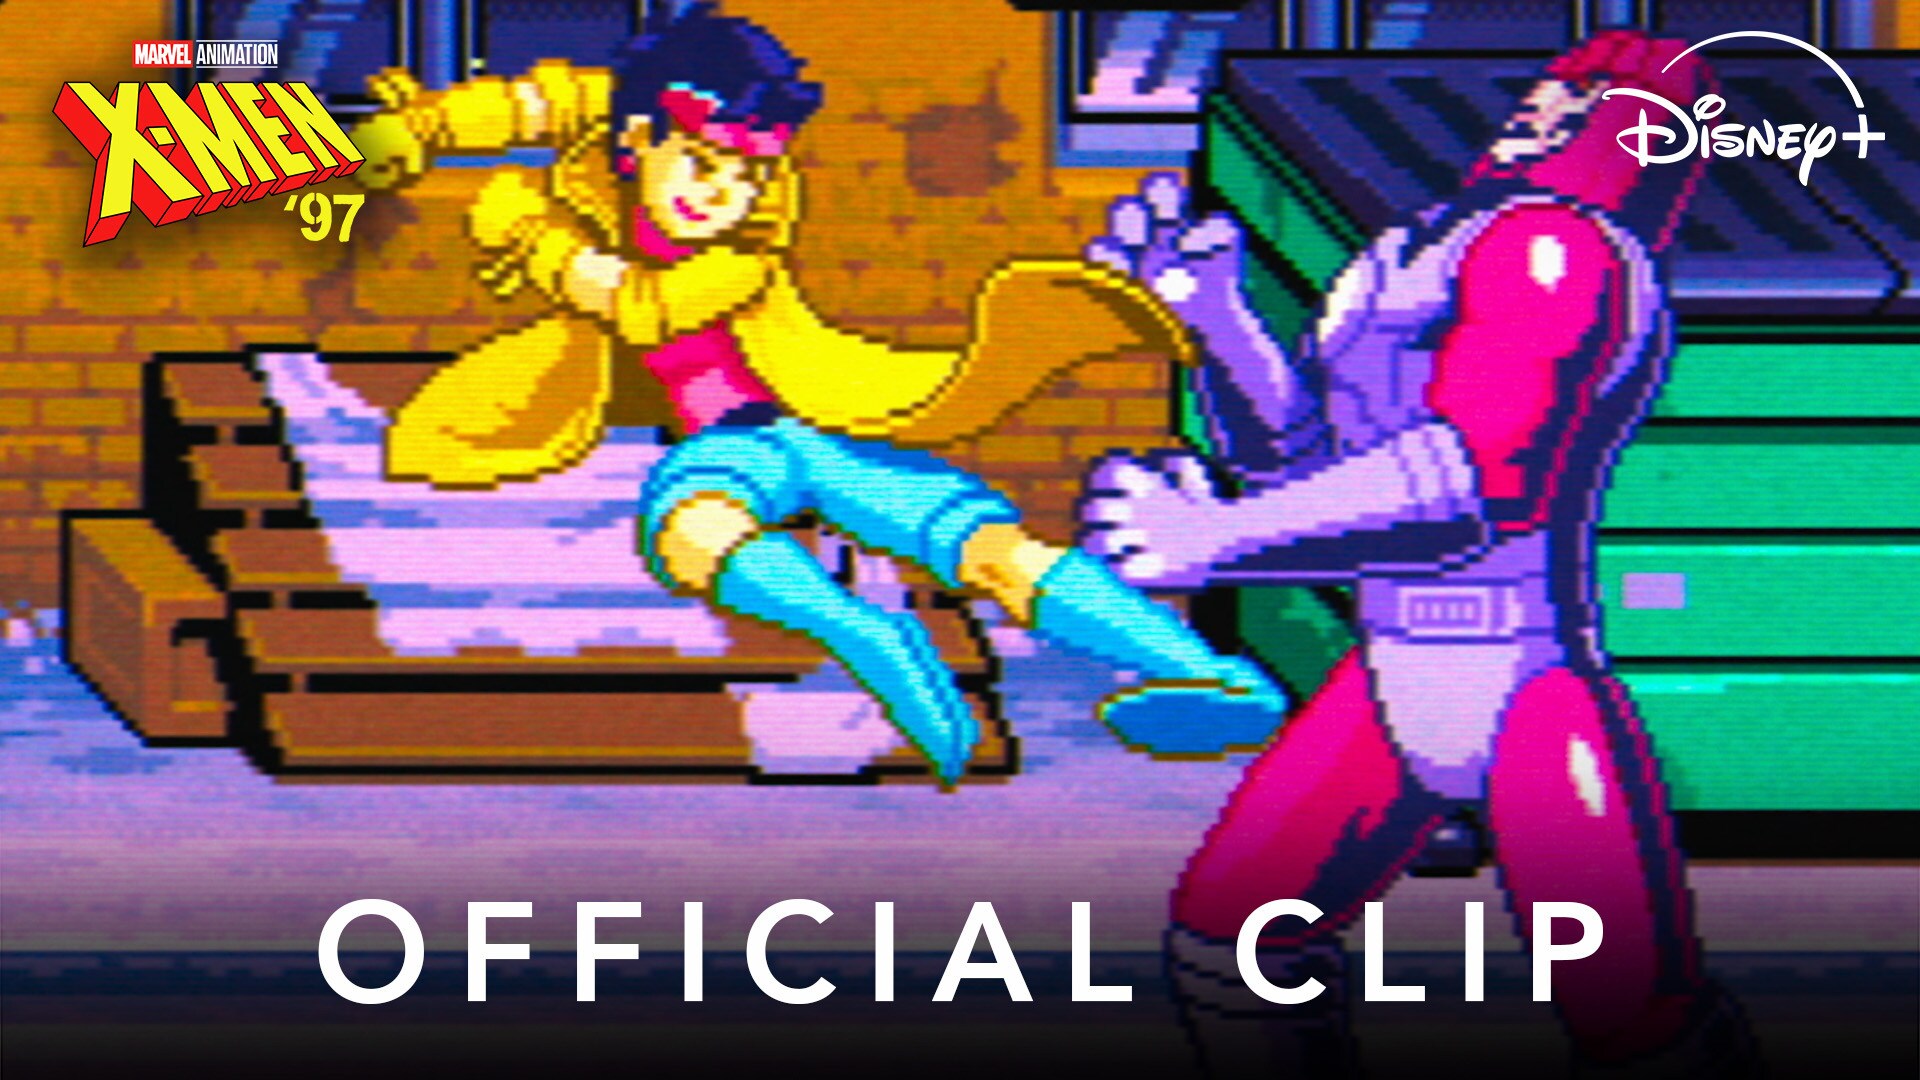 Marvel Animation's X-Men '97 | Official Clip 'X-Men Arcade' | Disney+